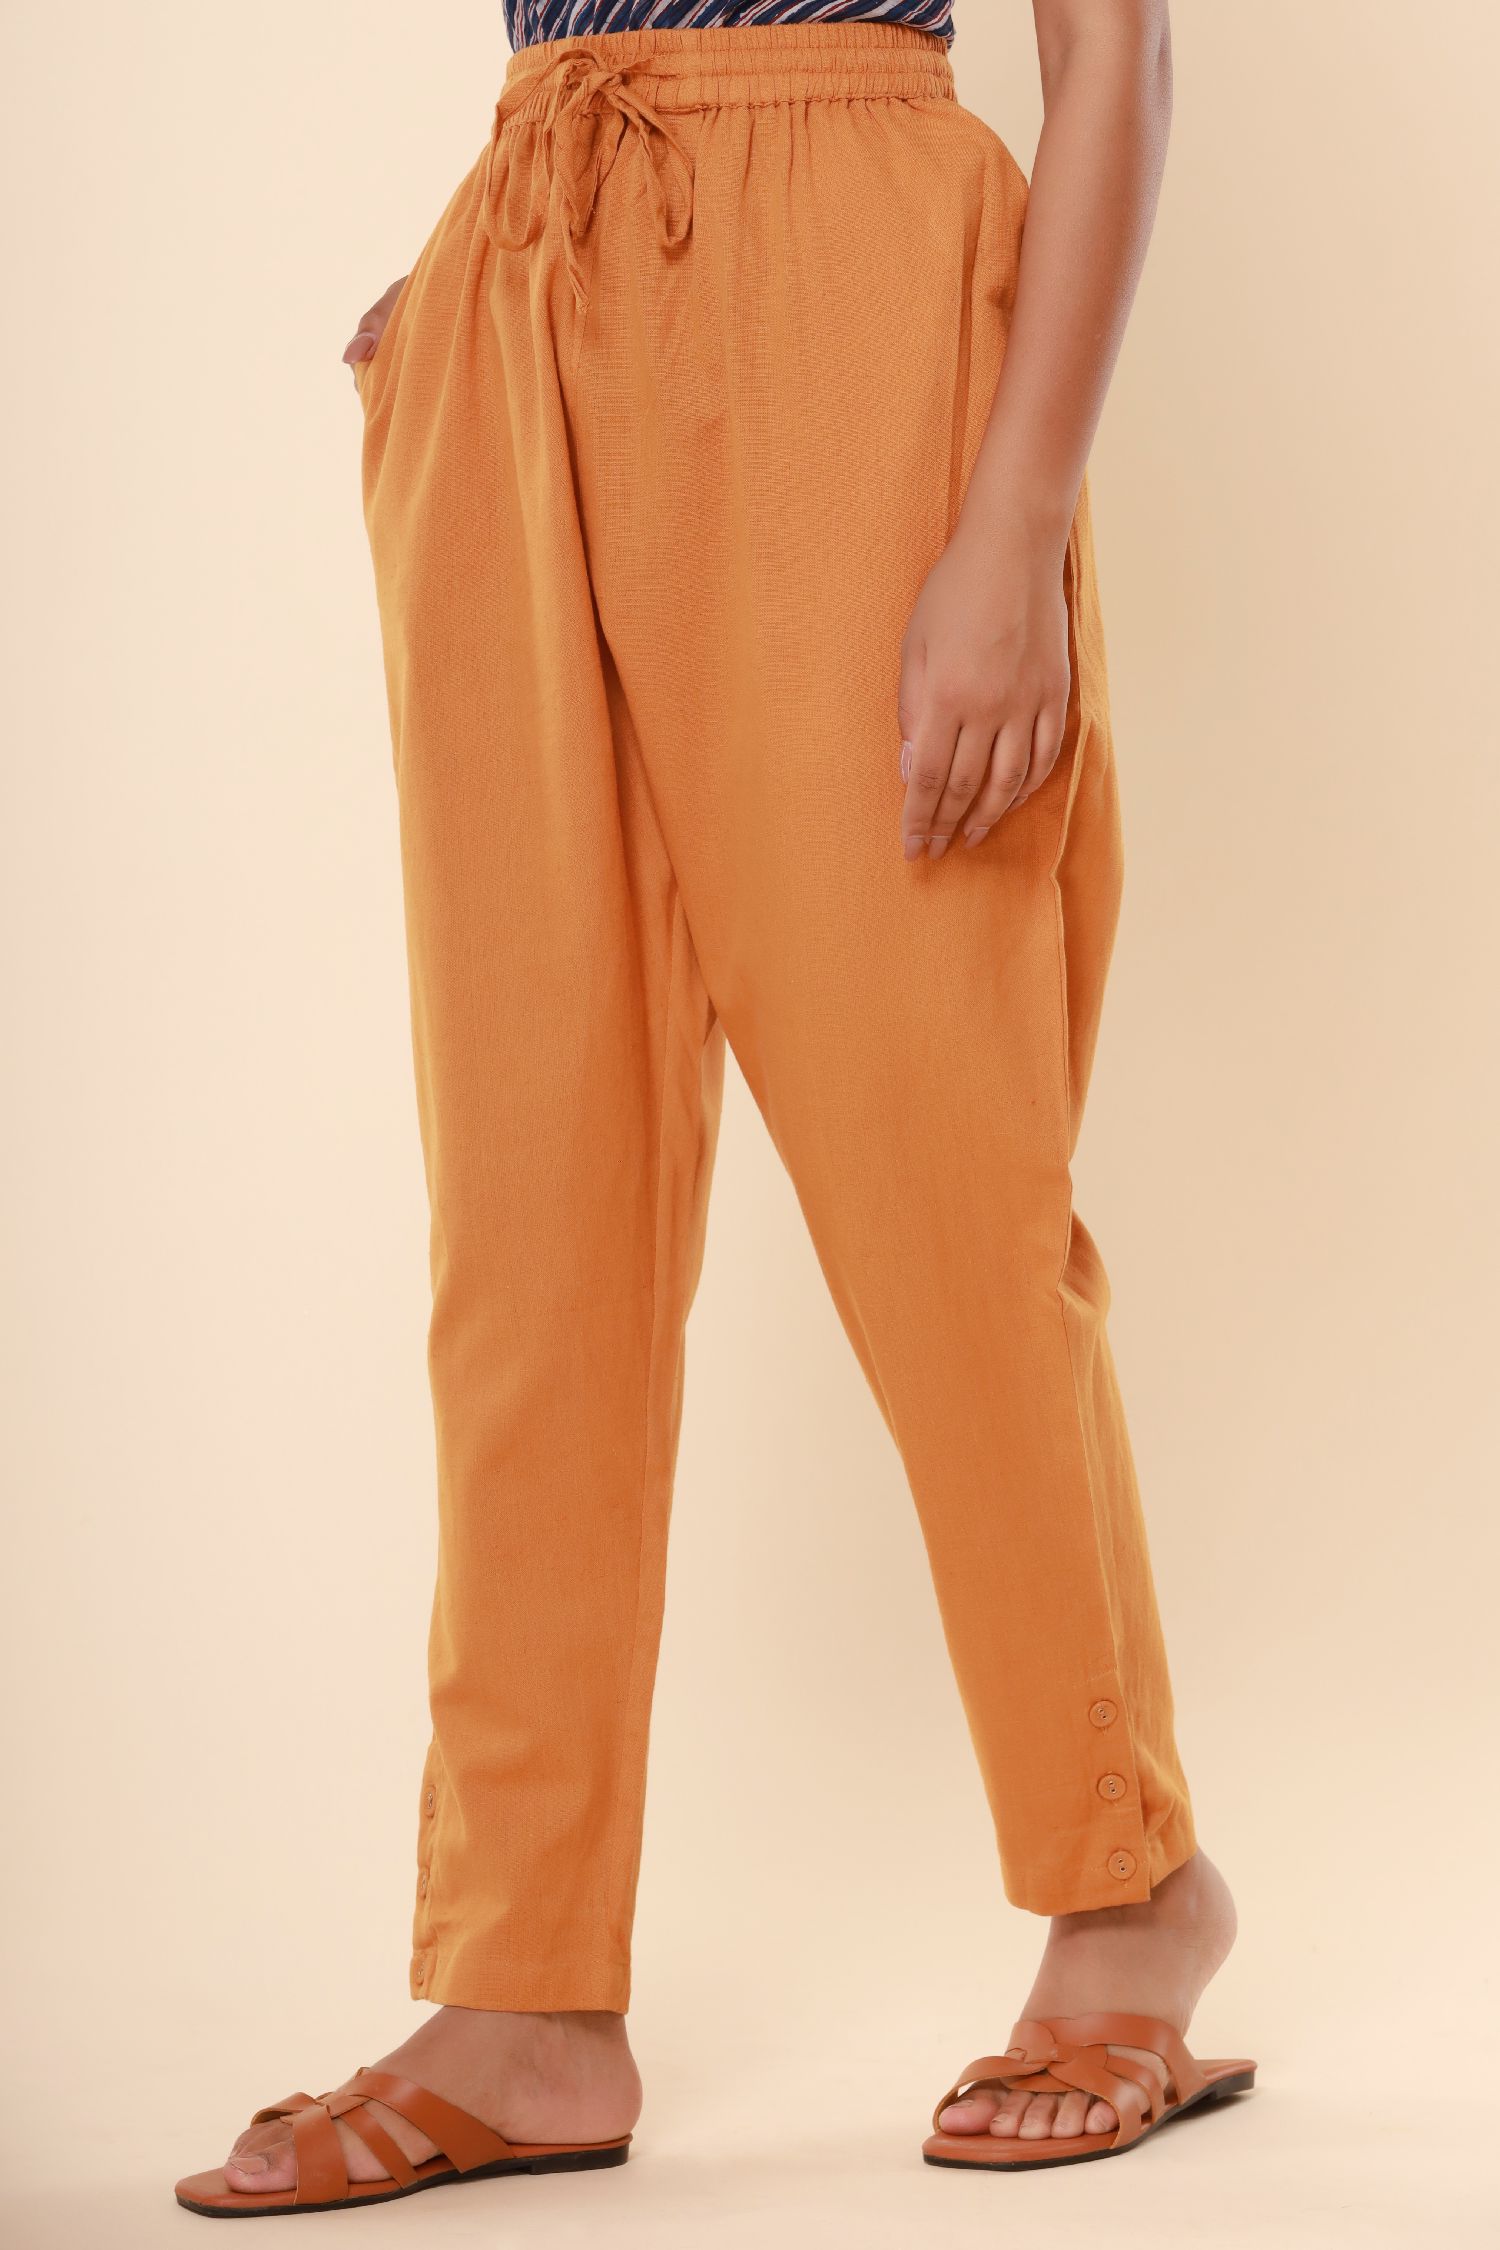 Ochre Yellow Cotton Flex Jodhpuri Pants